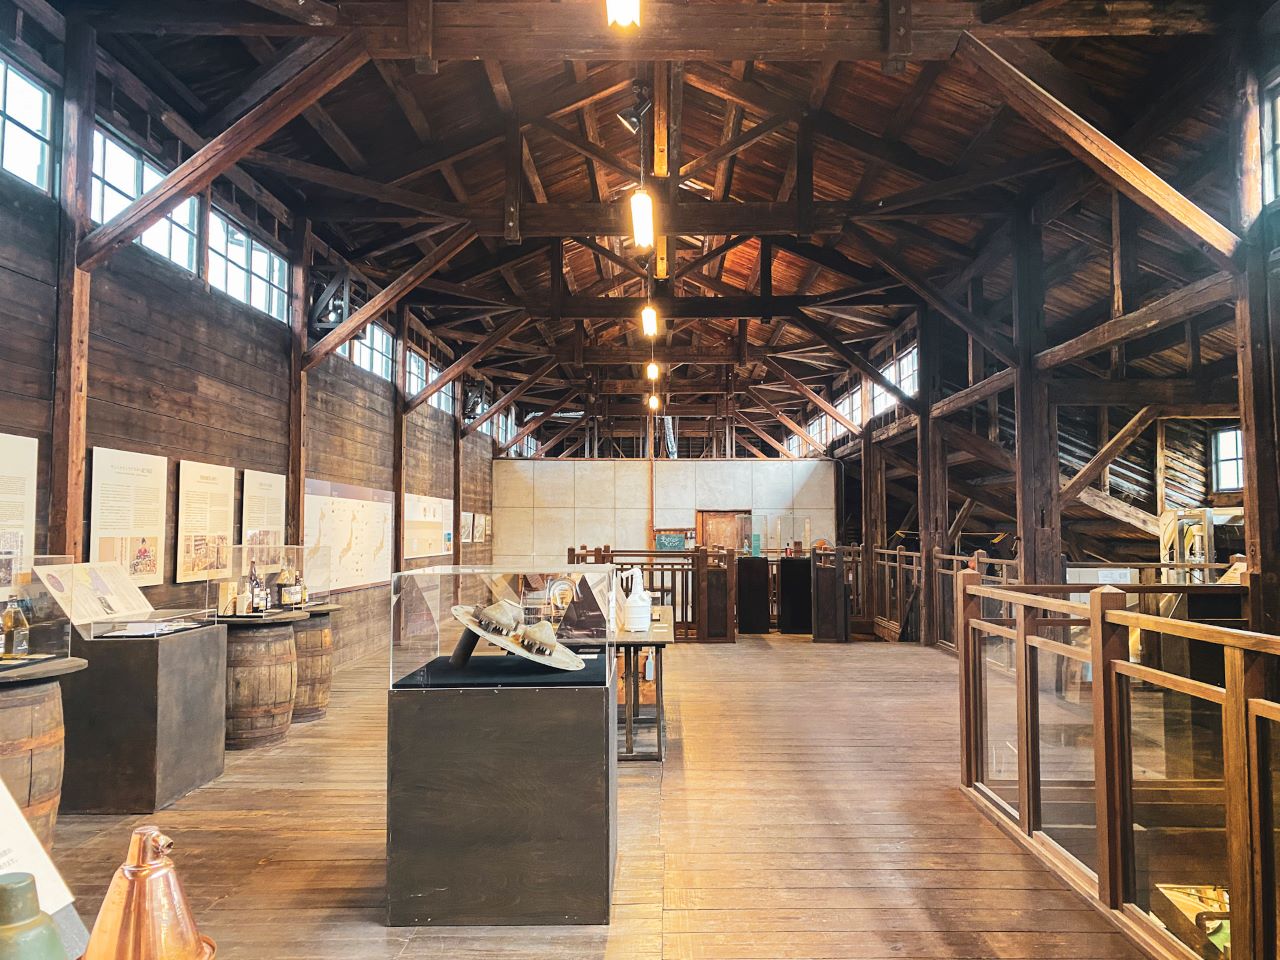 Wakatsuru Saburomaru distillery museum